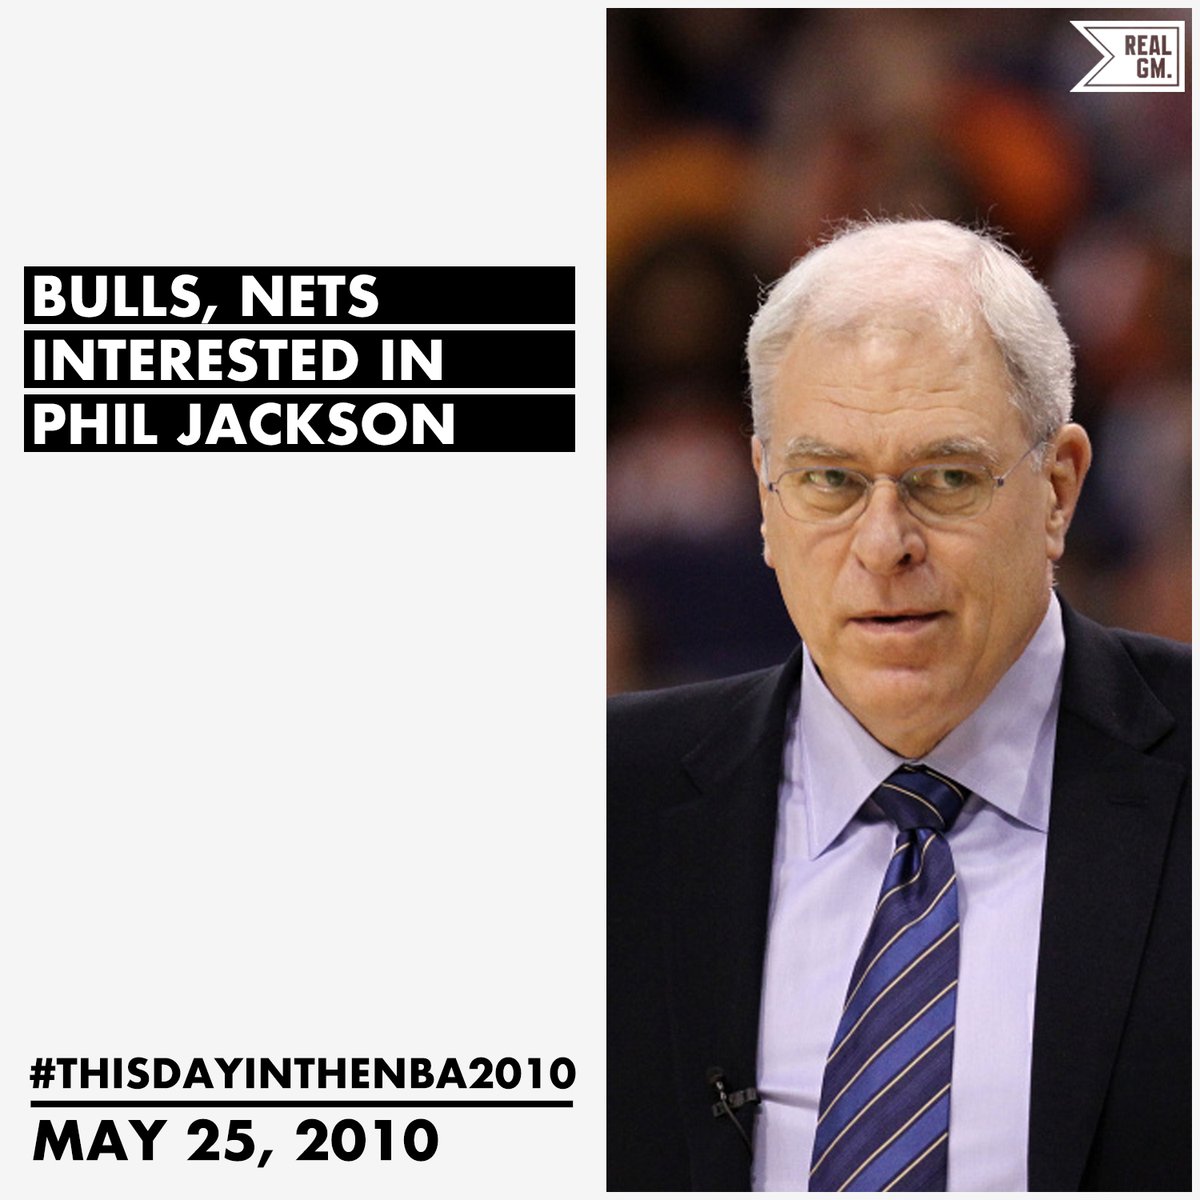  #ThisDayInTheNBA2010May 25, 2010Bulls, Nets Interested In Phil Jackson https://basketball.realgm.com/wiretap/204122/Bulls-Nets-Interested-In-Phil-Jackson